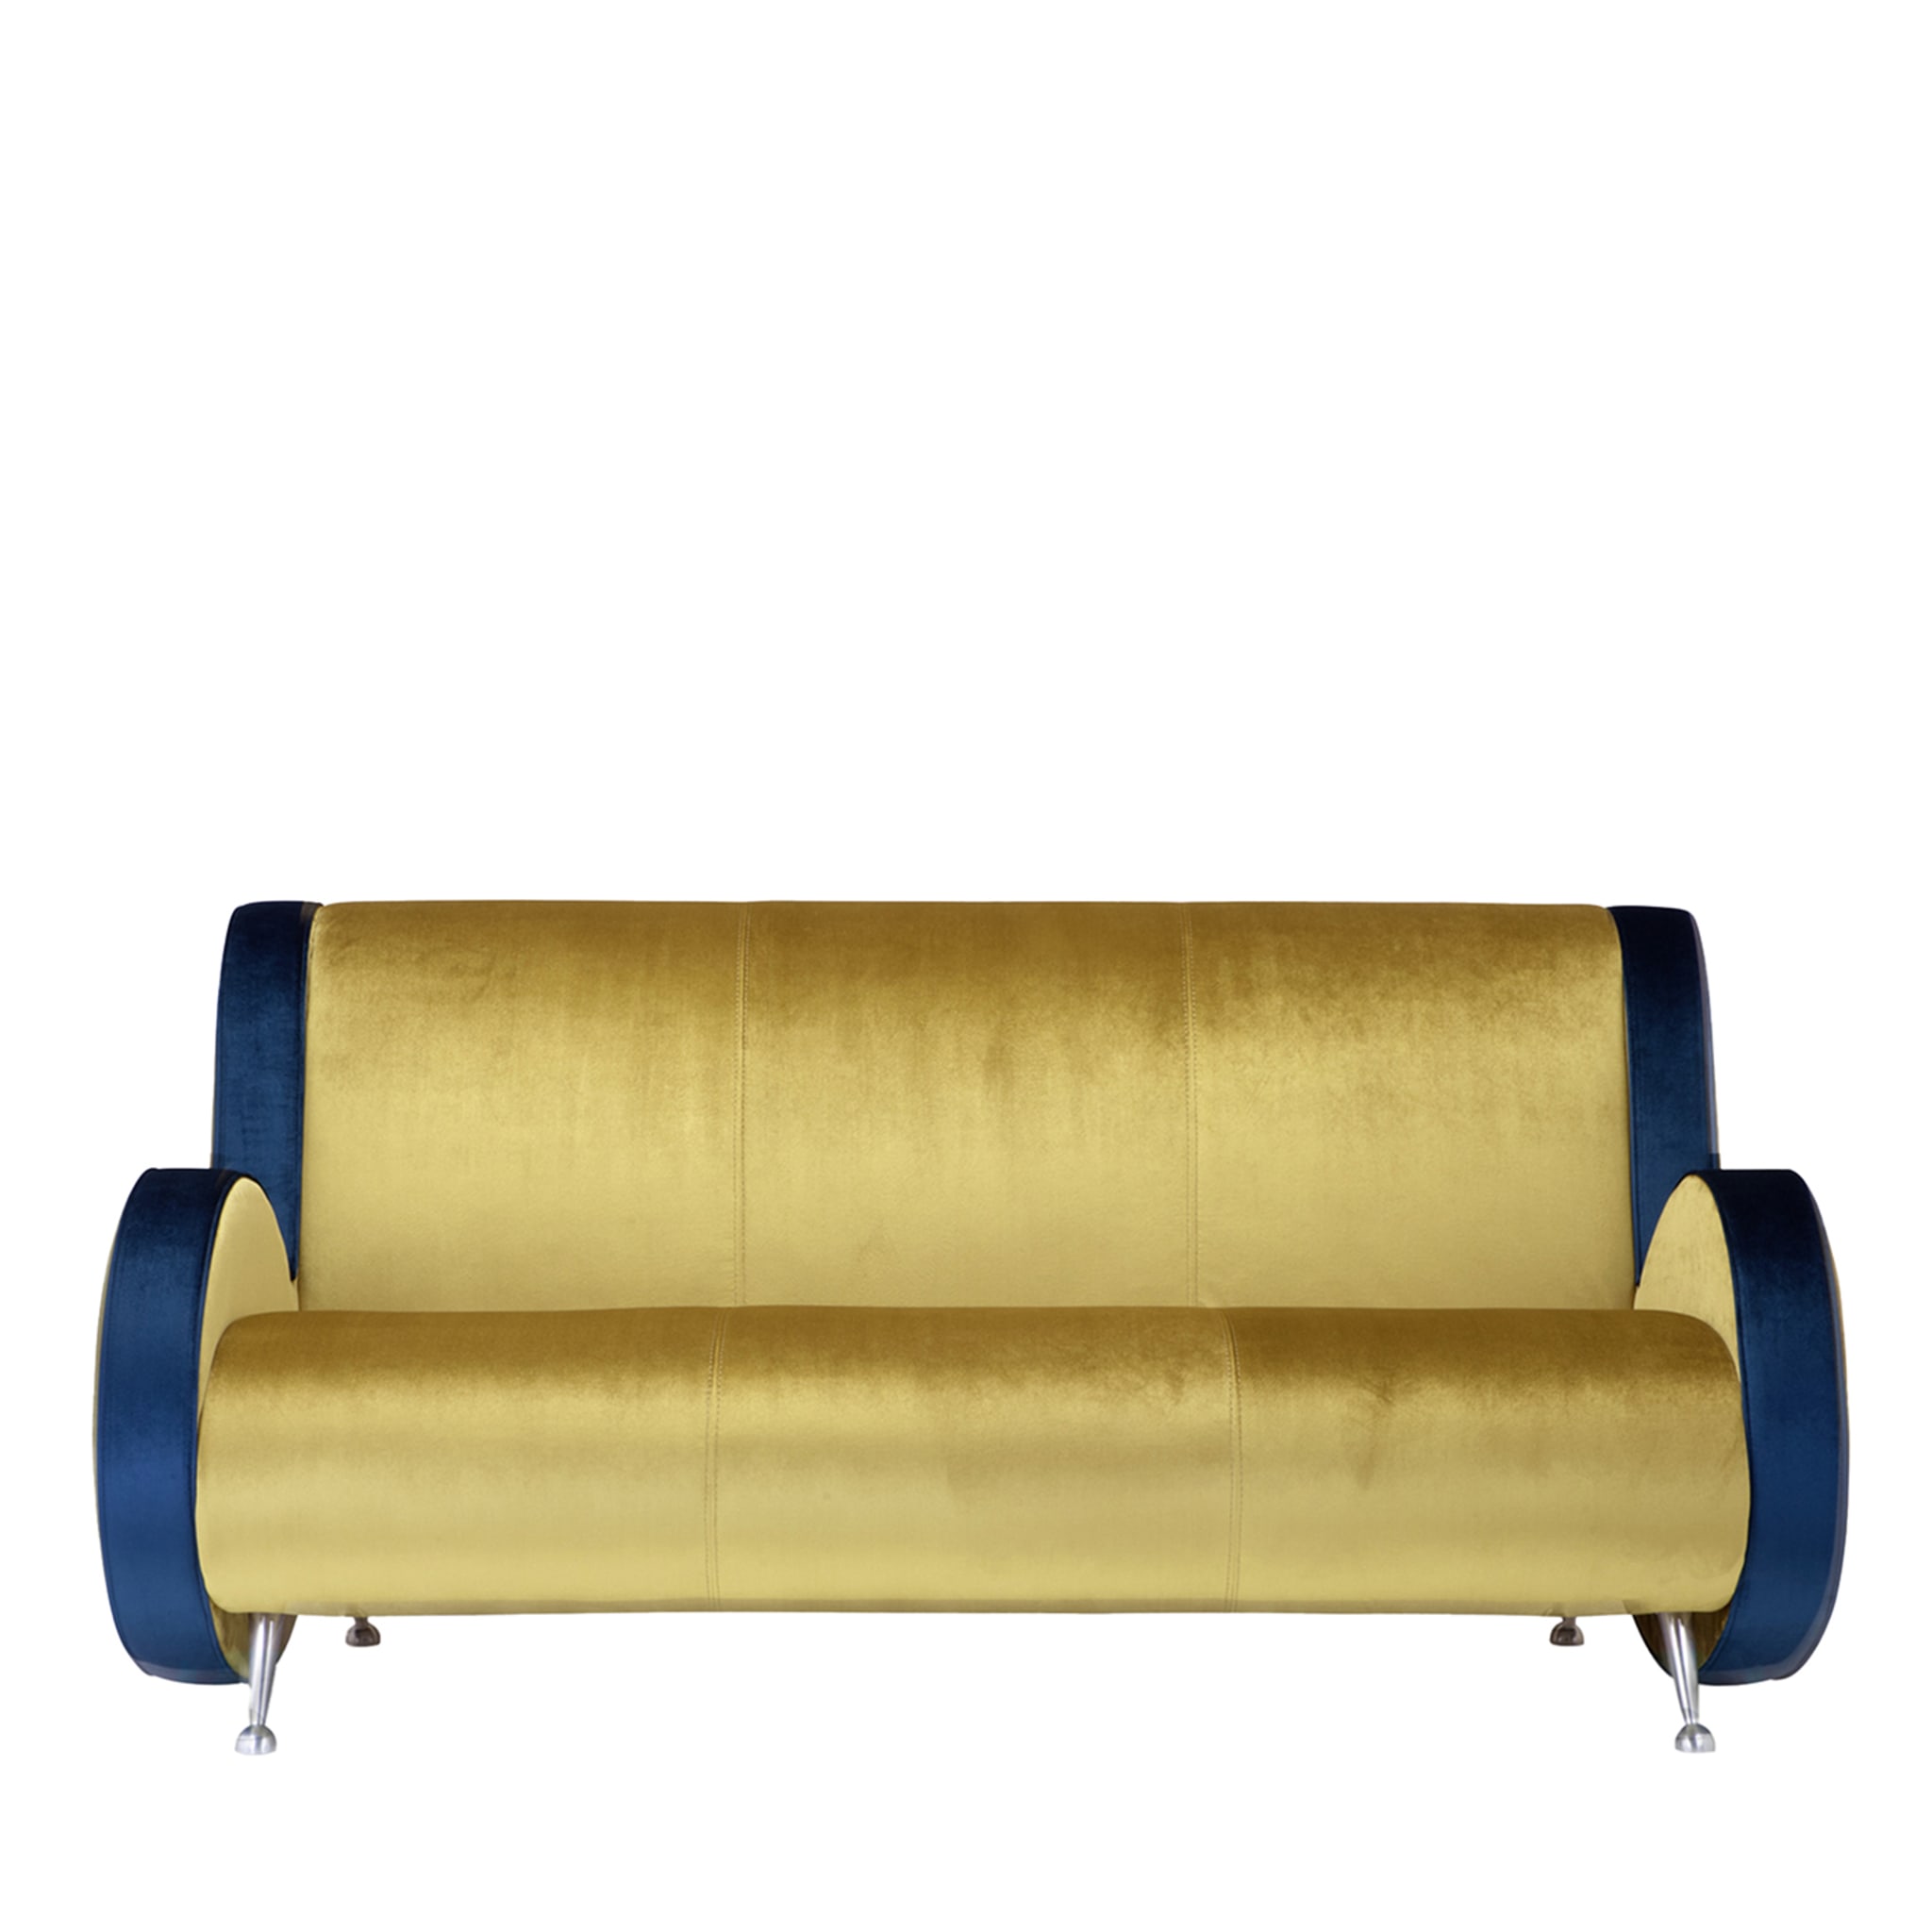 Ata 3-Seater Blue & Gold Sofa by Simone Micheli - Main view